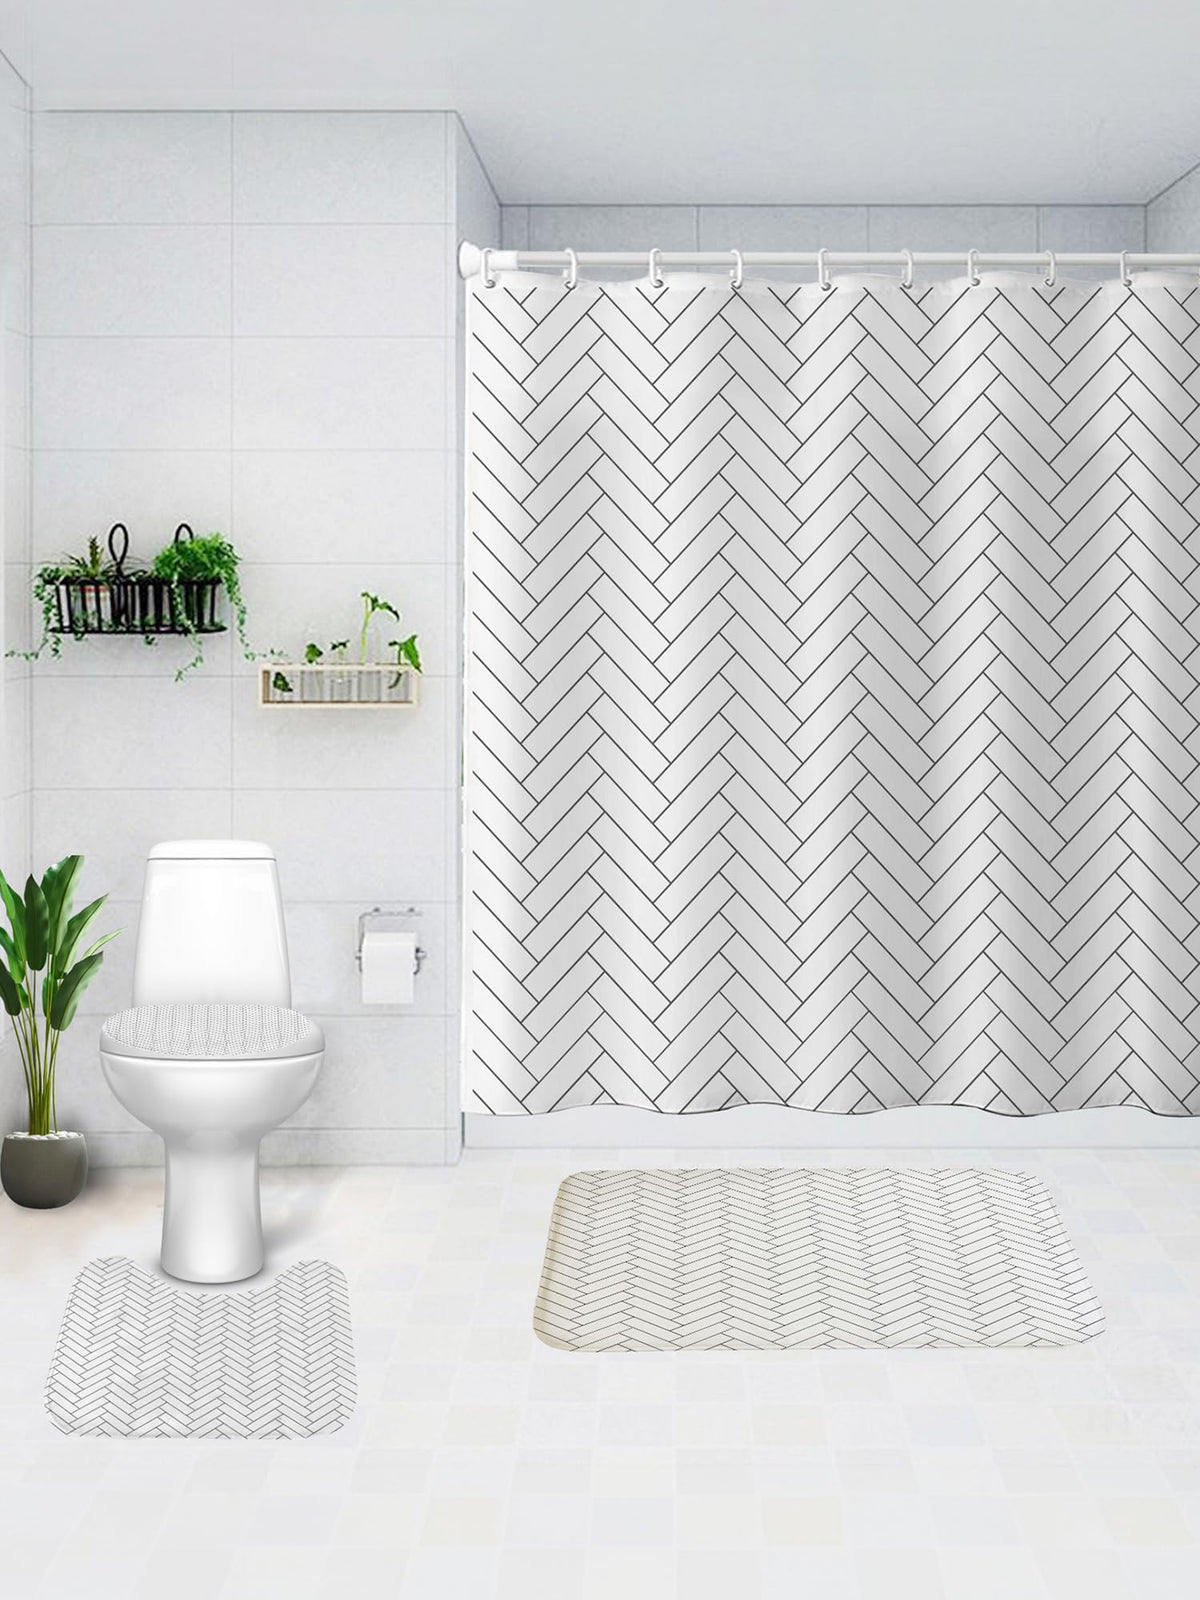 SAVYA HOME Shower Curtain (1) & Bathroom Mat (2) Set, Shower Curtains for Bathroom I, Waterproof Fabric I Anti Skid Mat for Bathroom Floor I Black White Herringbone, Pack of 3